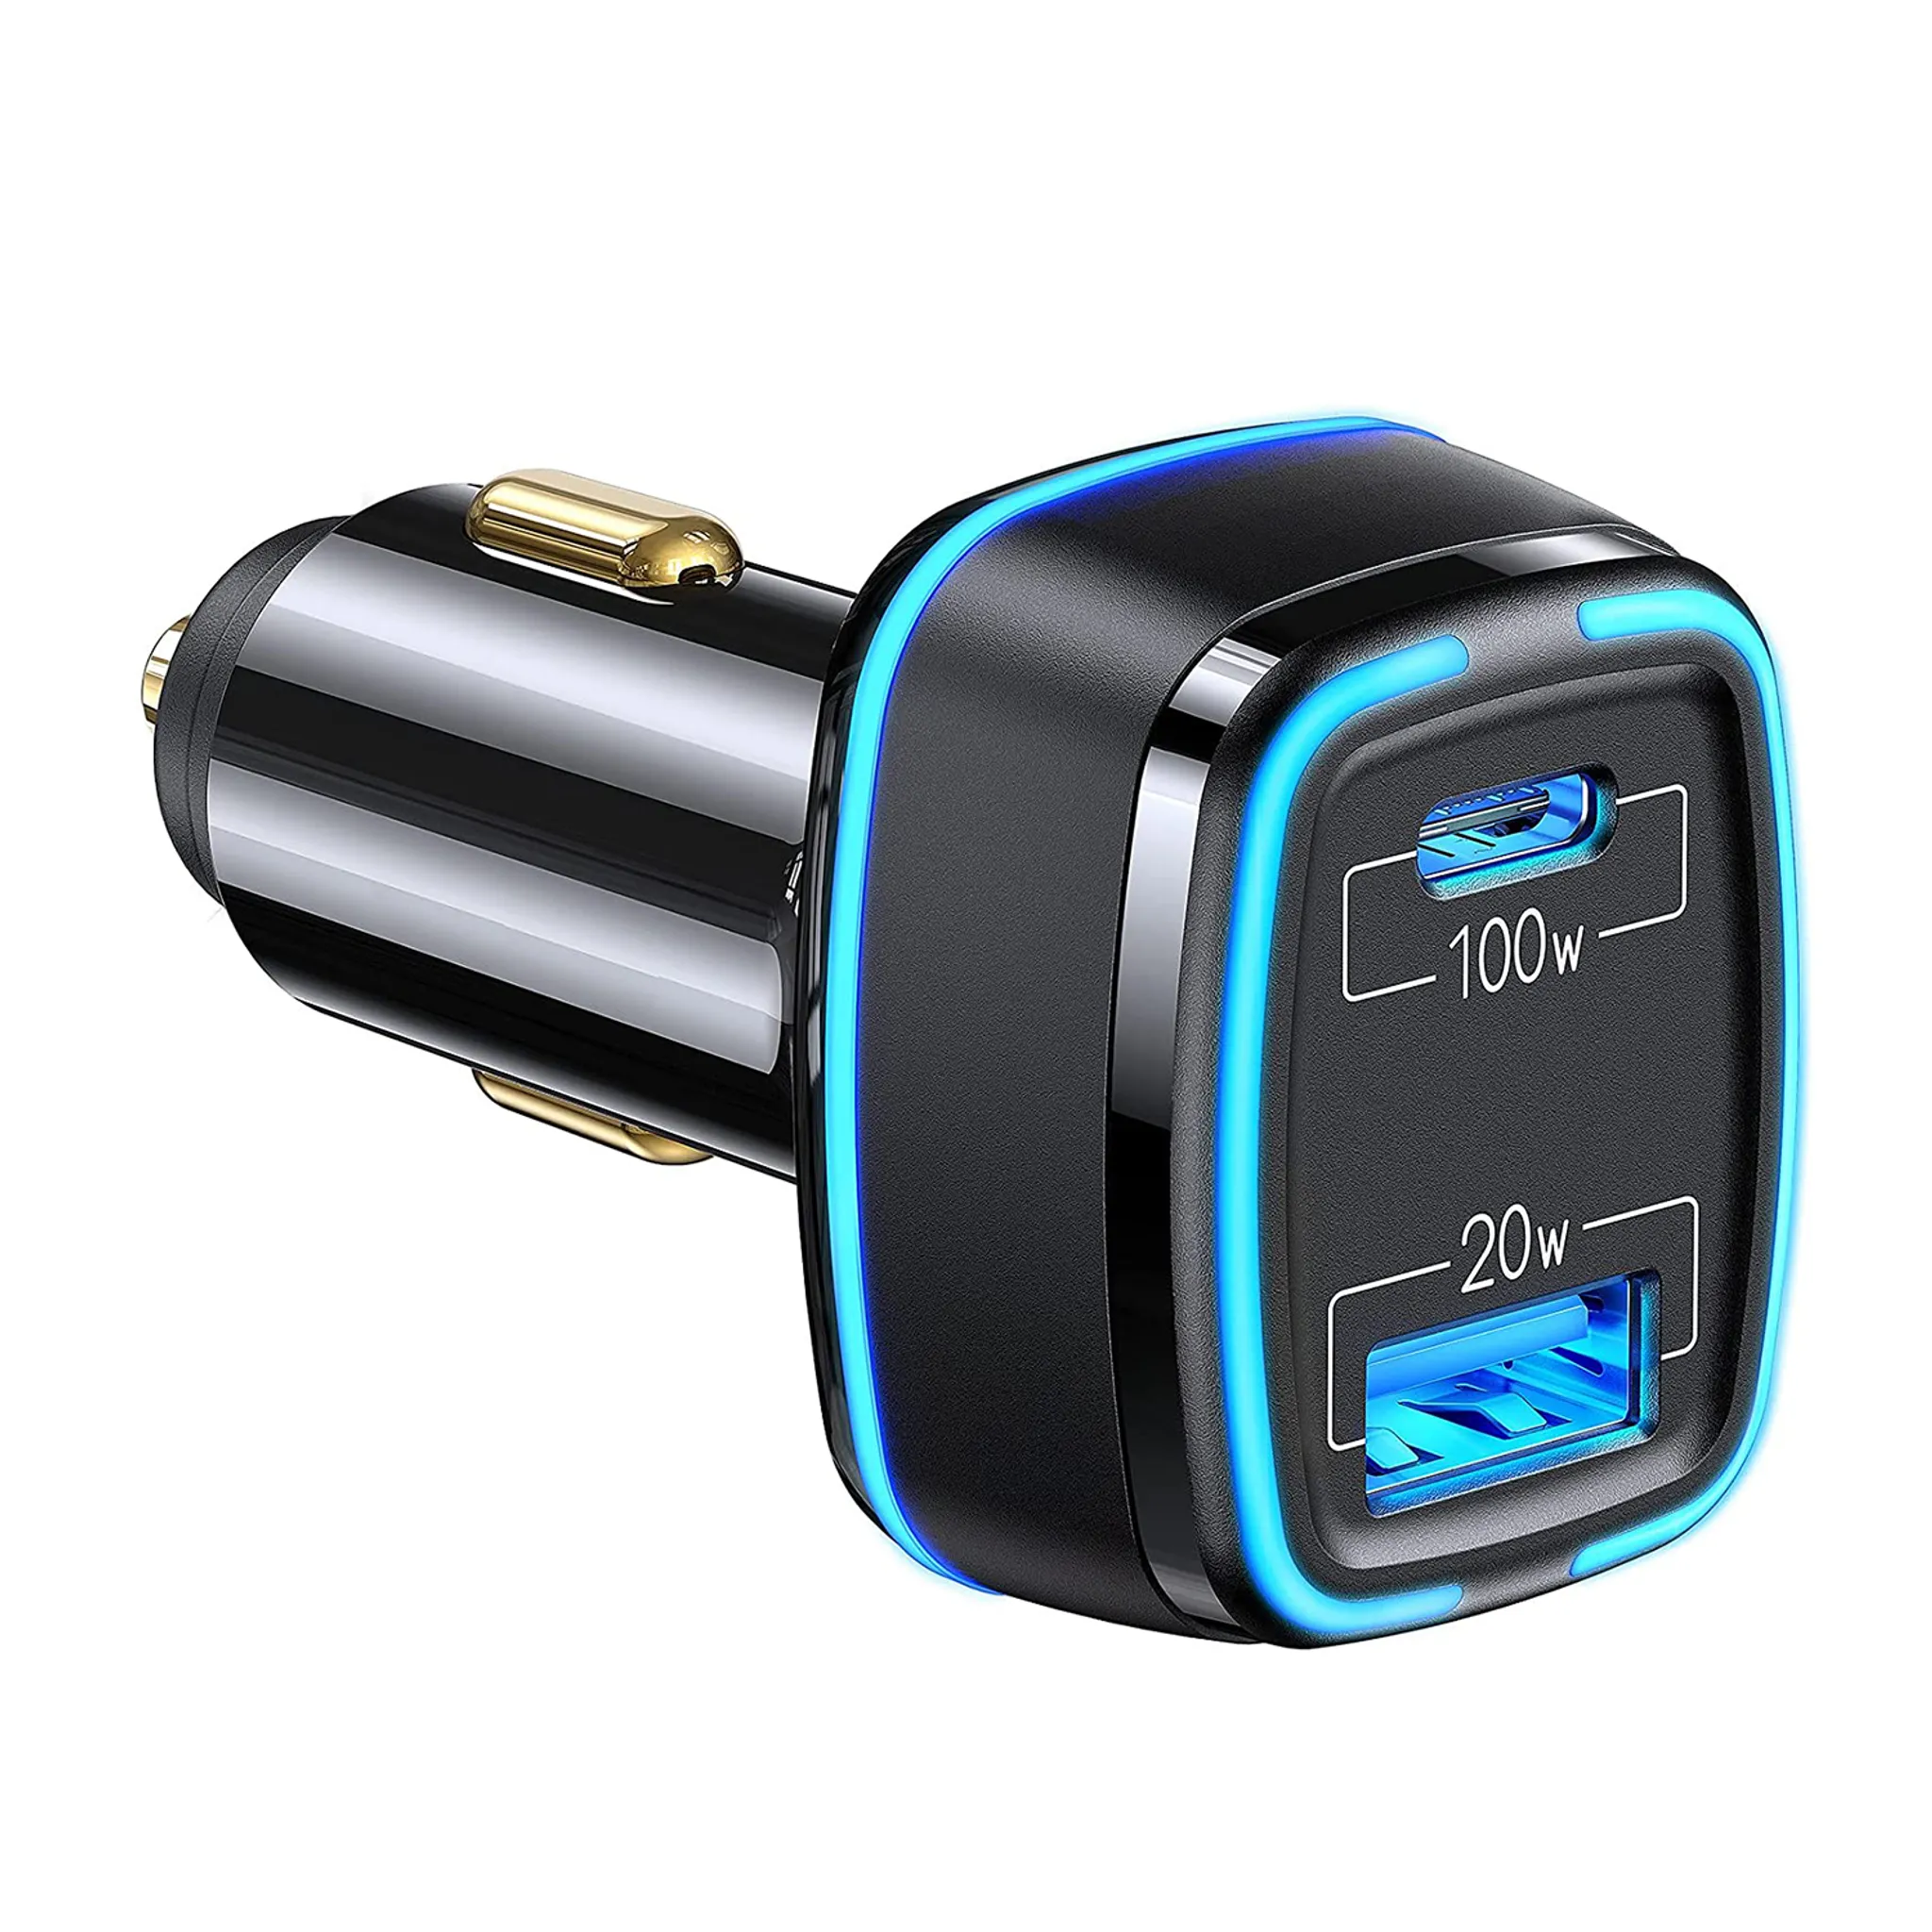 vhbw Autoladegerät Autoladekabel Ladekabel USB 12V Zigarettenanzünder  Adapter kompatibel mit Smartphone, GPS, Mp3-Player kaufen